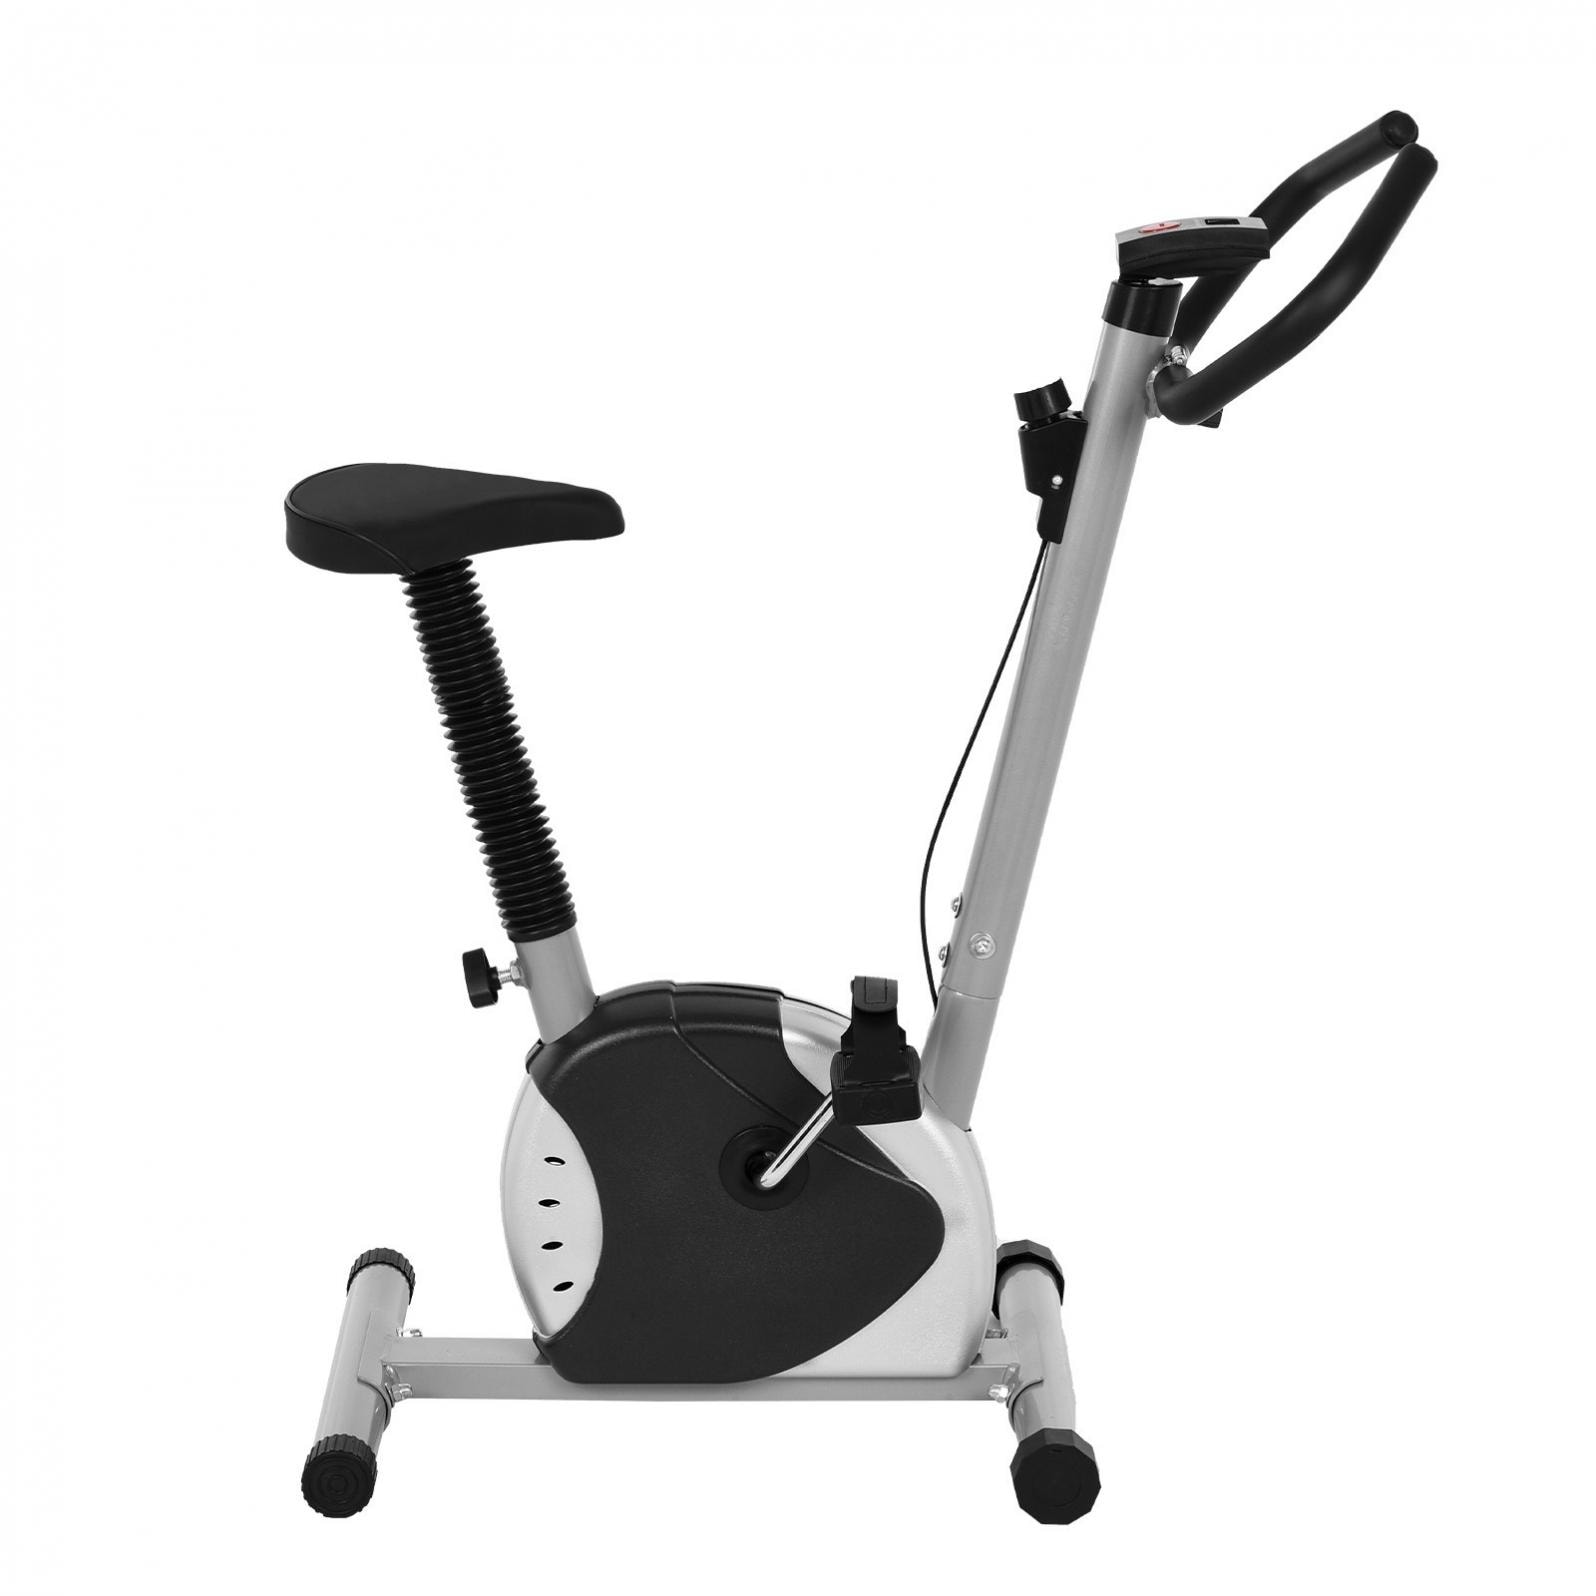 Adjustable Aerobic Training Exercise Bike Fitness Cardio Workout Cycling Machine 